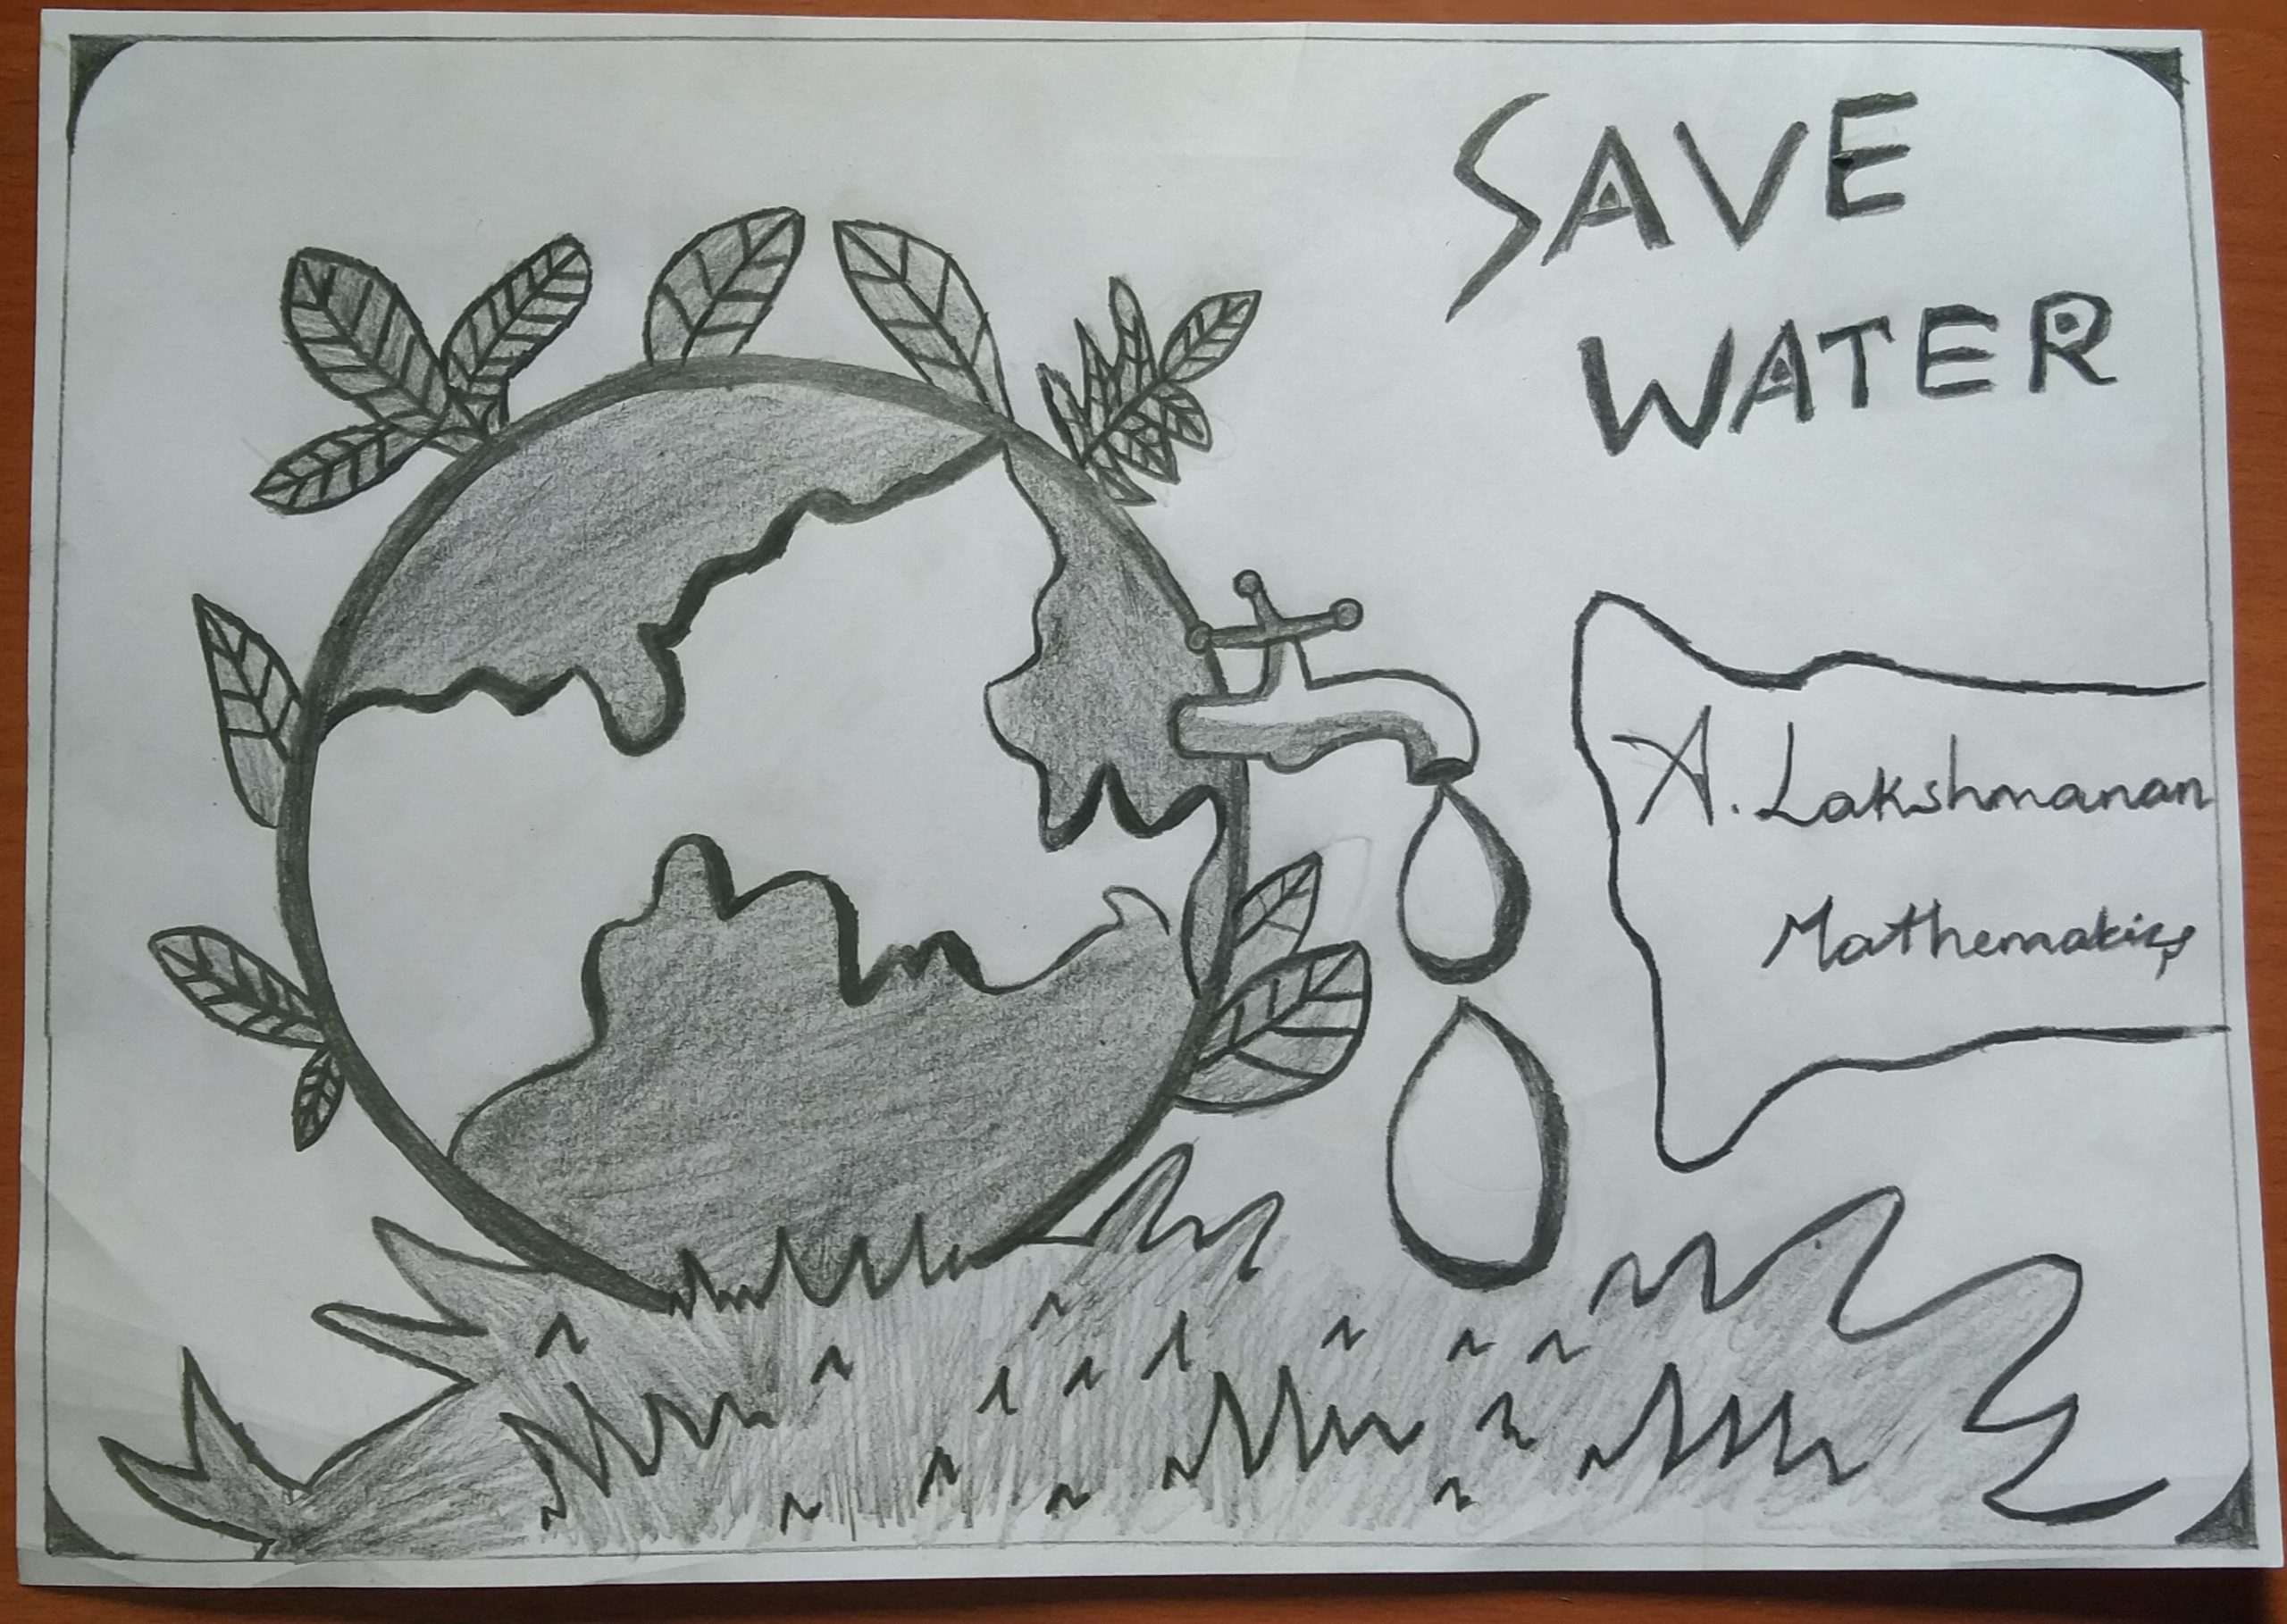 Save Water Poster  Save Water Save Life Drawing PNG Image  Transparent  PNG Free Download on SeekPNG